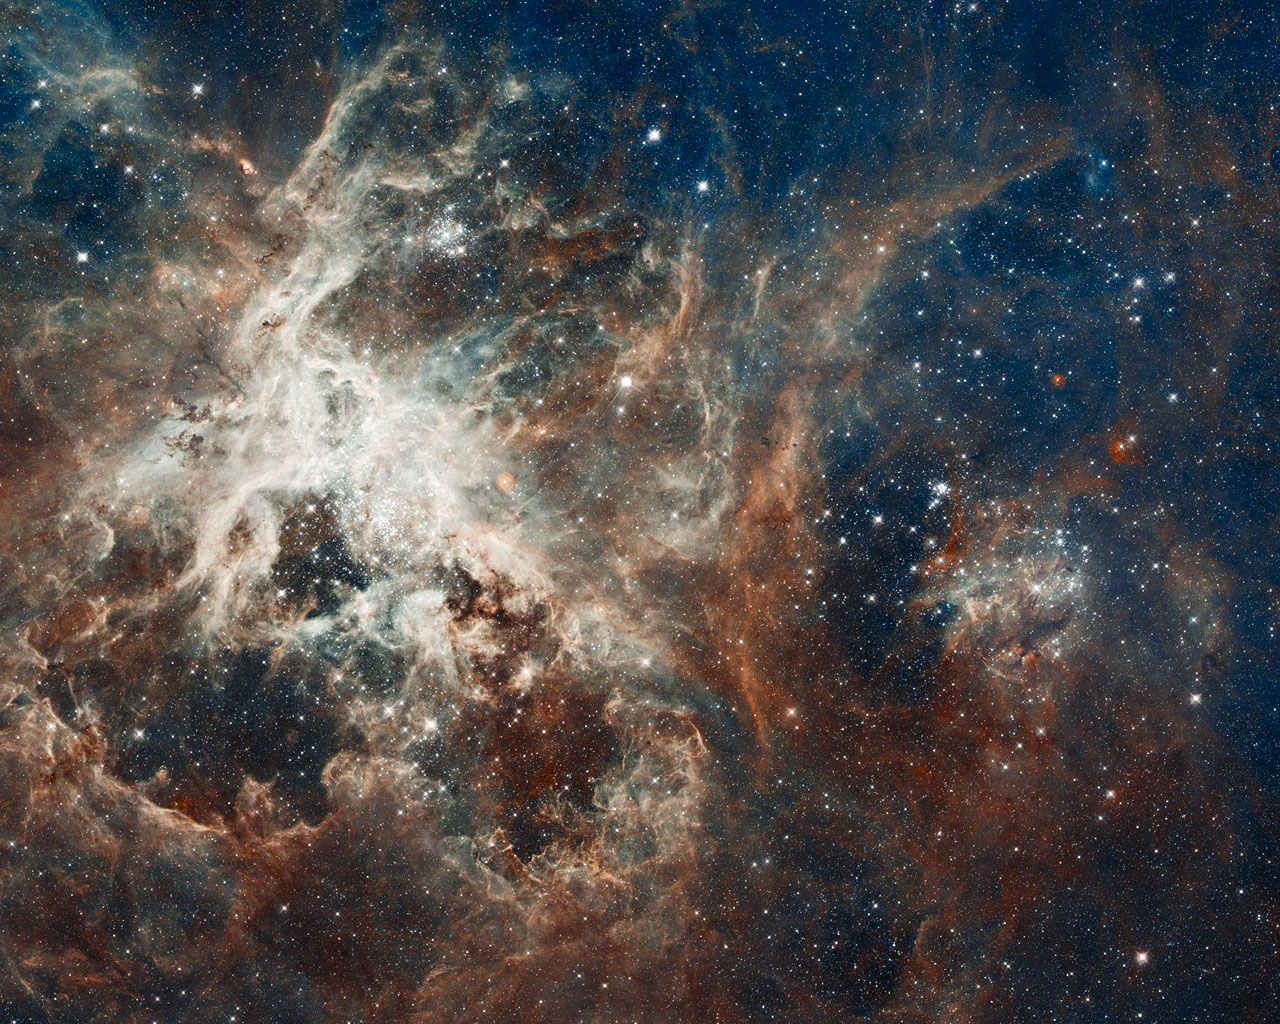 Star Formation in the Tarantula Nebula Image Credit: NASA, ESA, ESO, D. Lennon (ESA/STScI) et al., and the Hubble Heritage Team (STScI/AURA) 